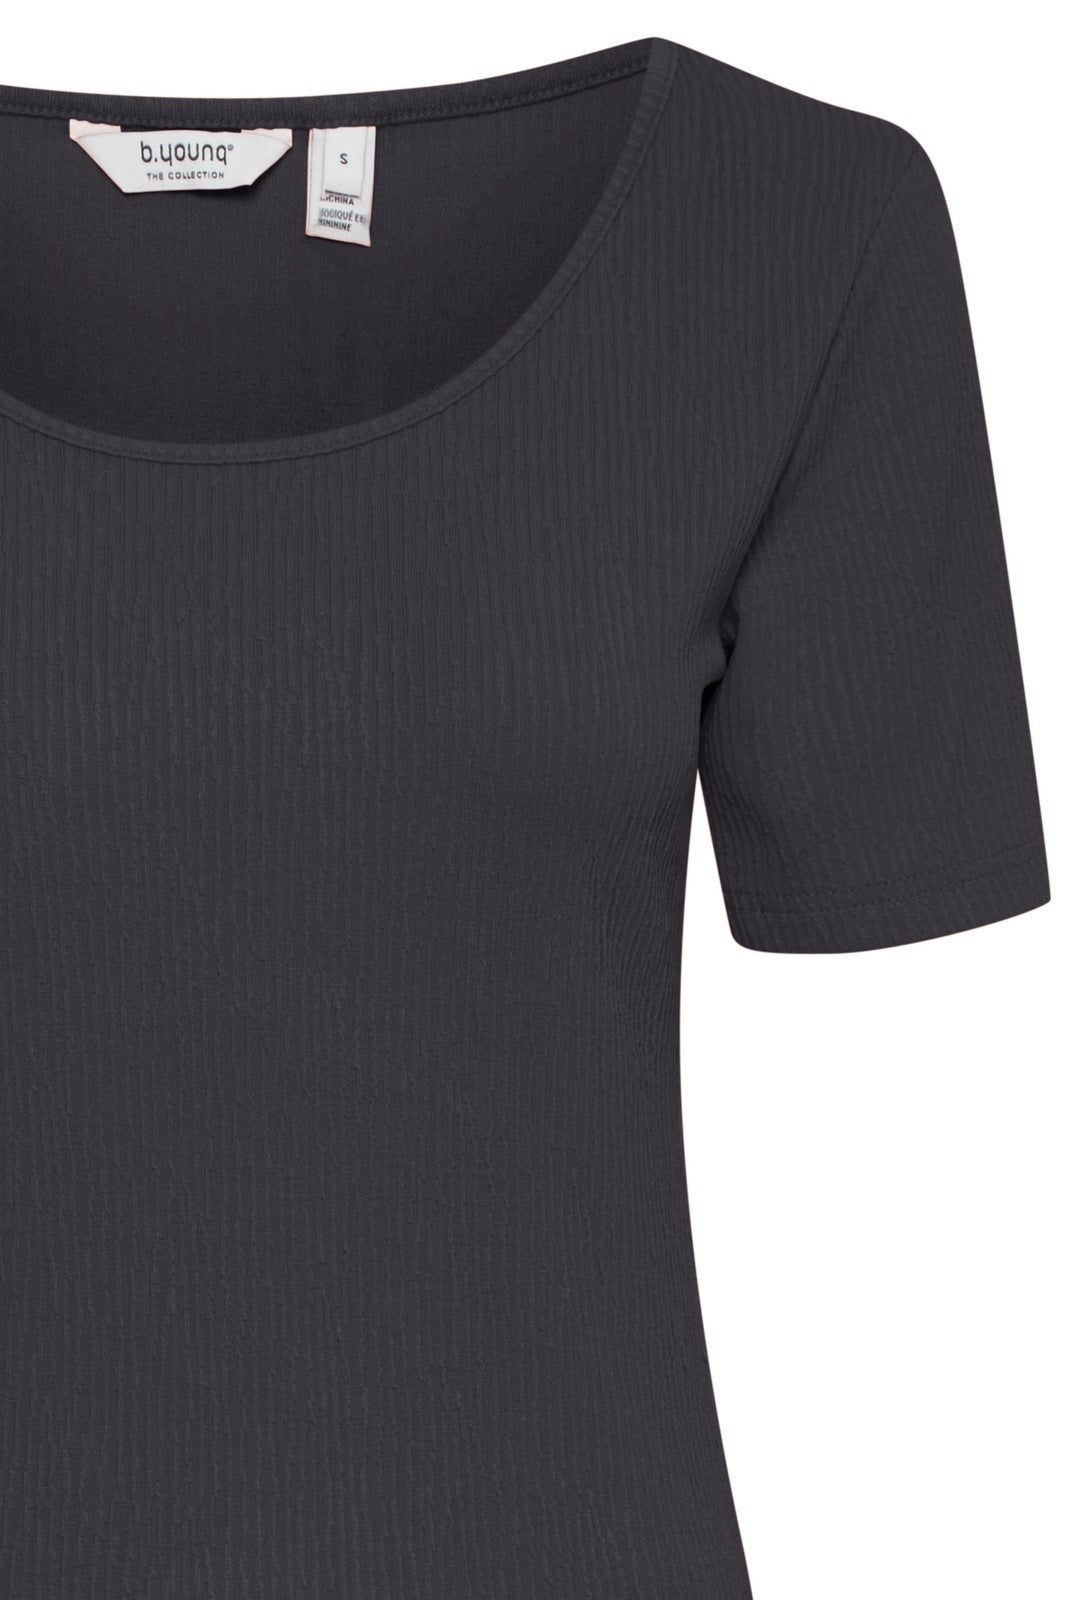 B.young Rimanila T-Shirt - Black 2 Shaws Department Stores